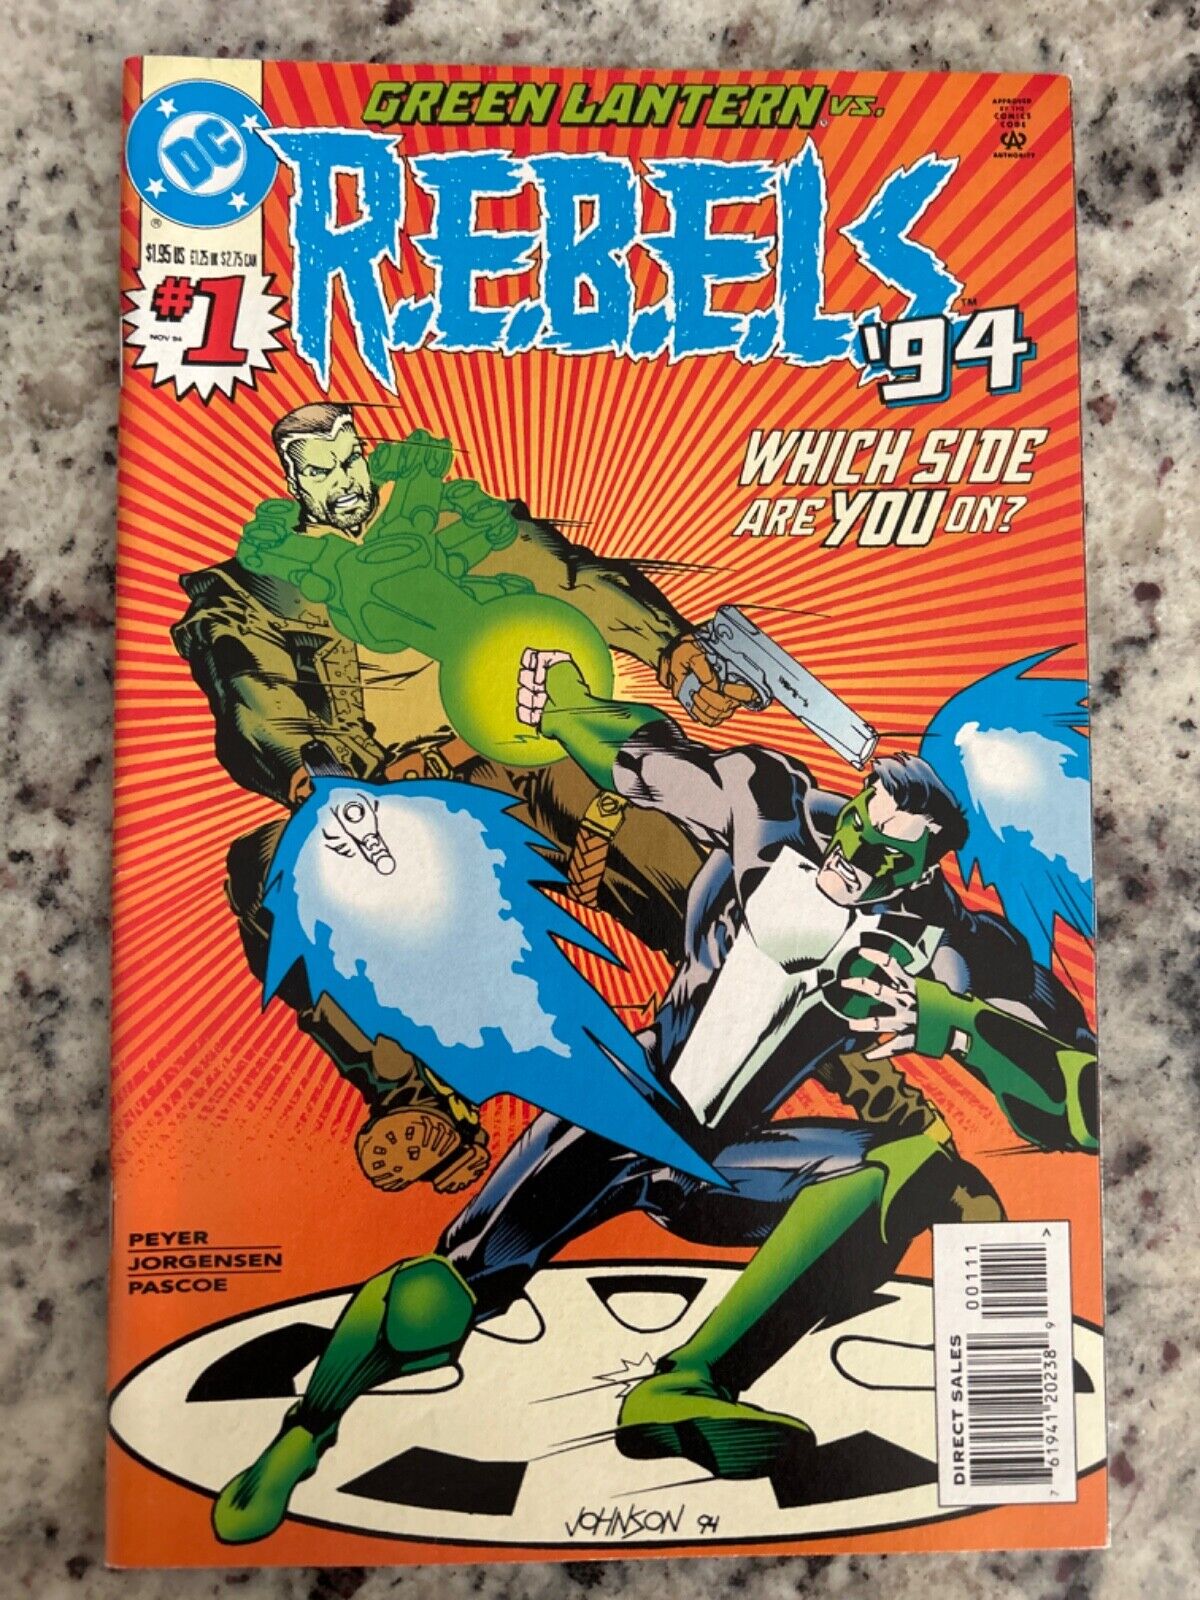 R.E.B.E.L.S. ‘94 #1 Vol. 1 (DC, 1994) Green Lantern, vf